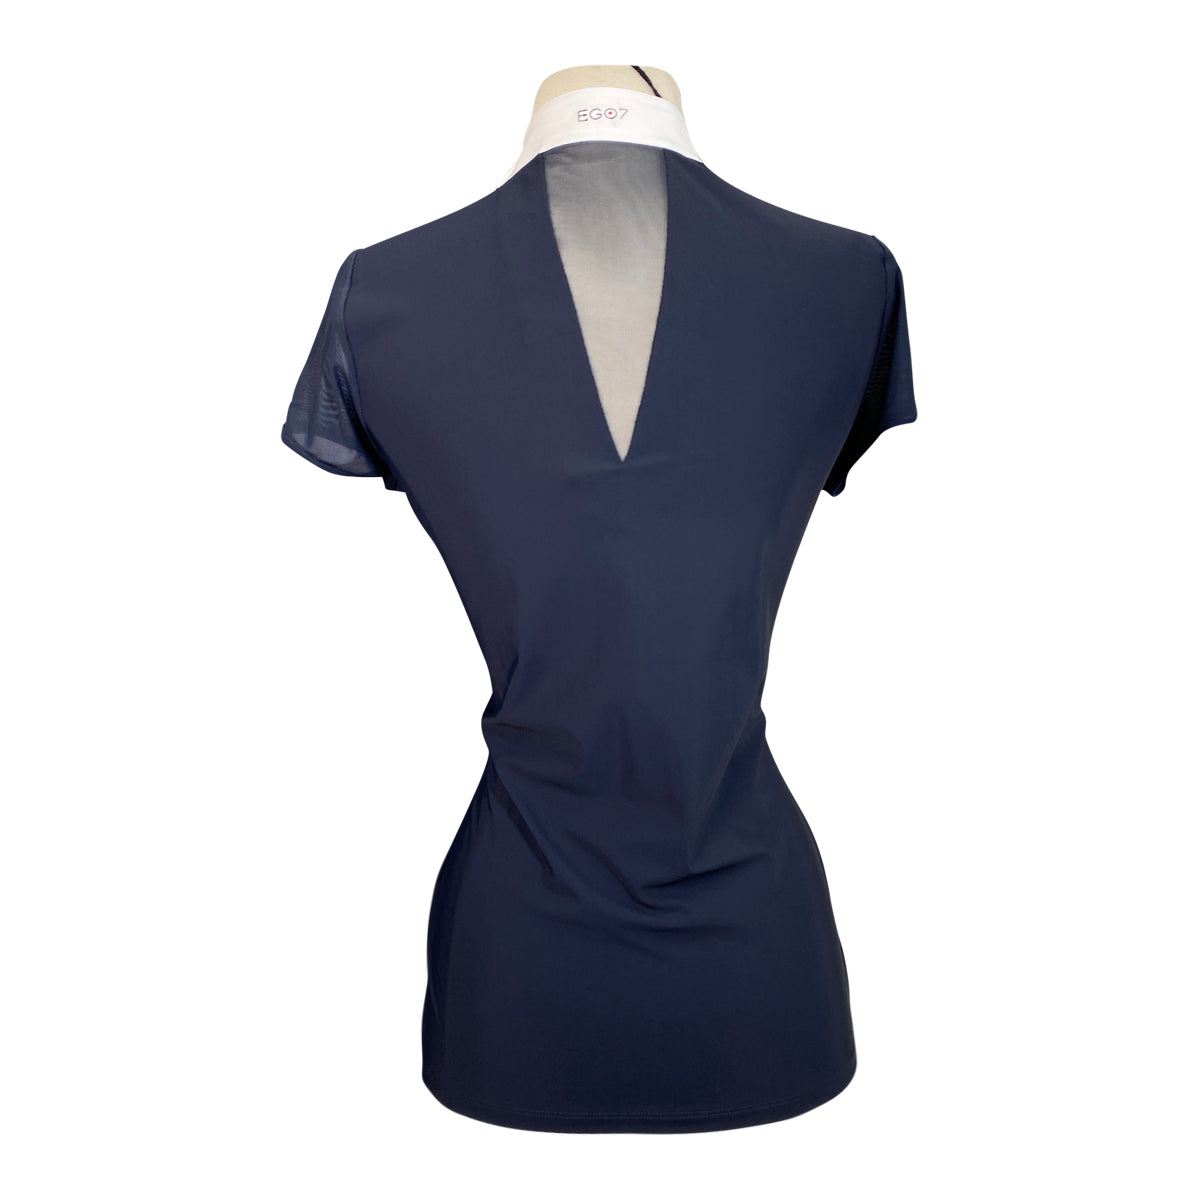 EGO7 &#39;Rita&#39; Short Sleeve Show Shirt in Navy - Women&#39;s IT 40 (US Small)